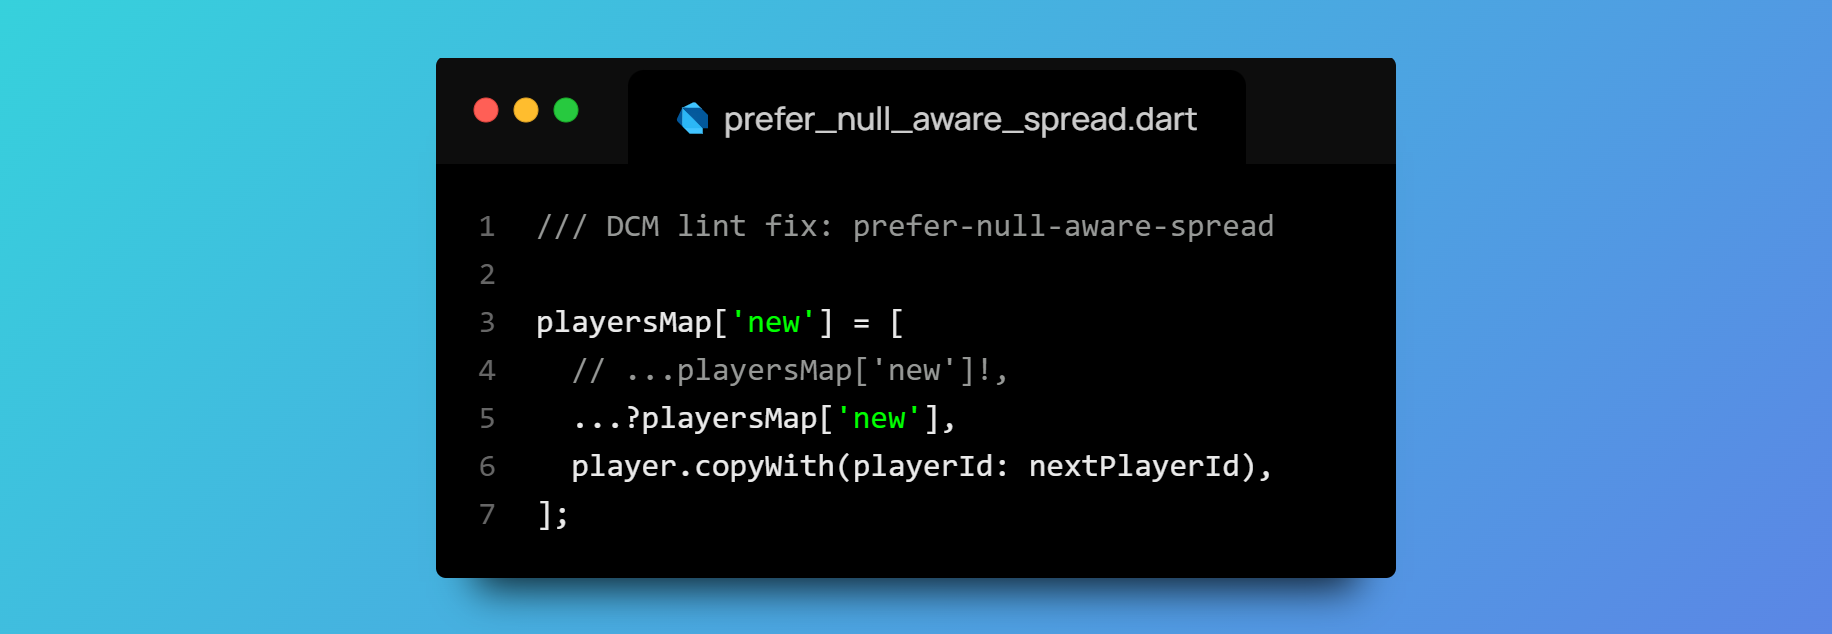 DCM lint fix: prefer-null-aware-spread | `...?playersMap['new'],`